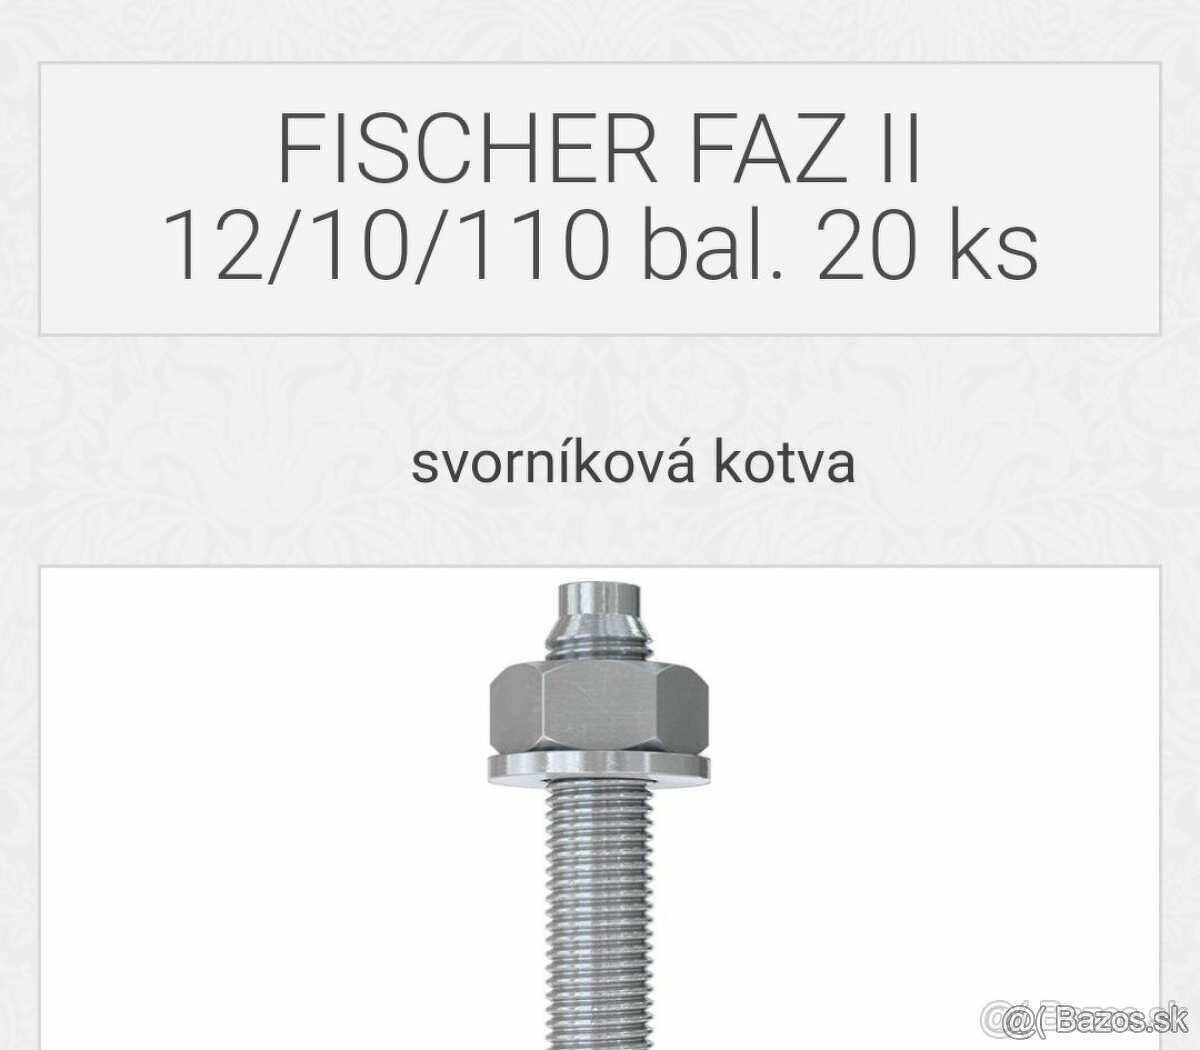 Predám svorníkové kotvy FISCHER FAZ II 12/10/110, typ 95419